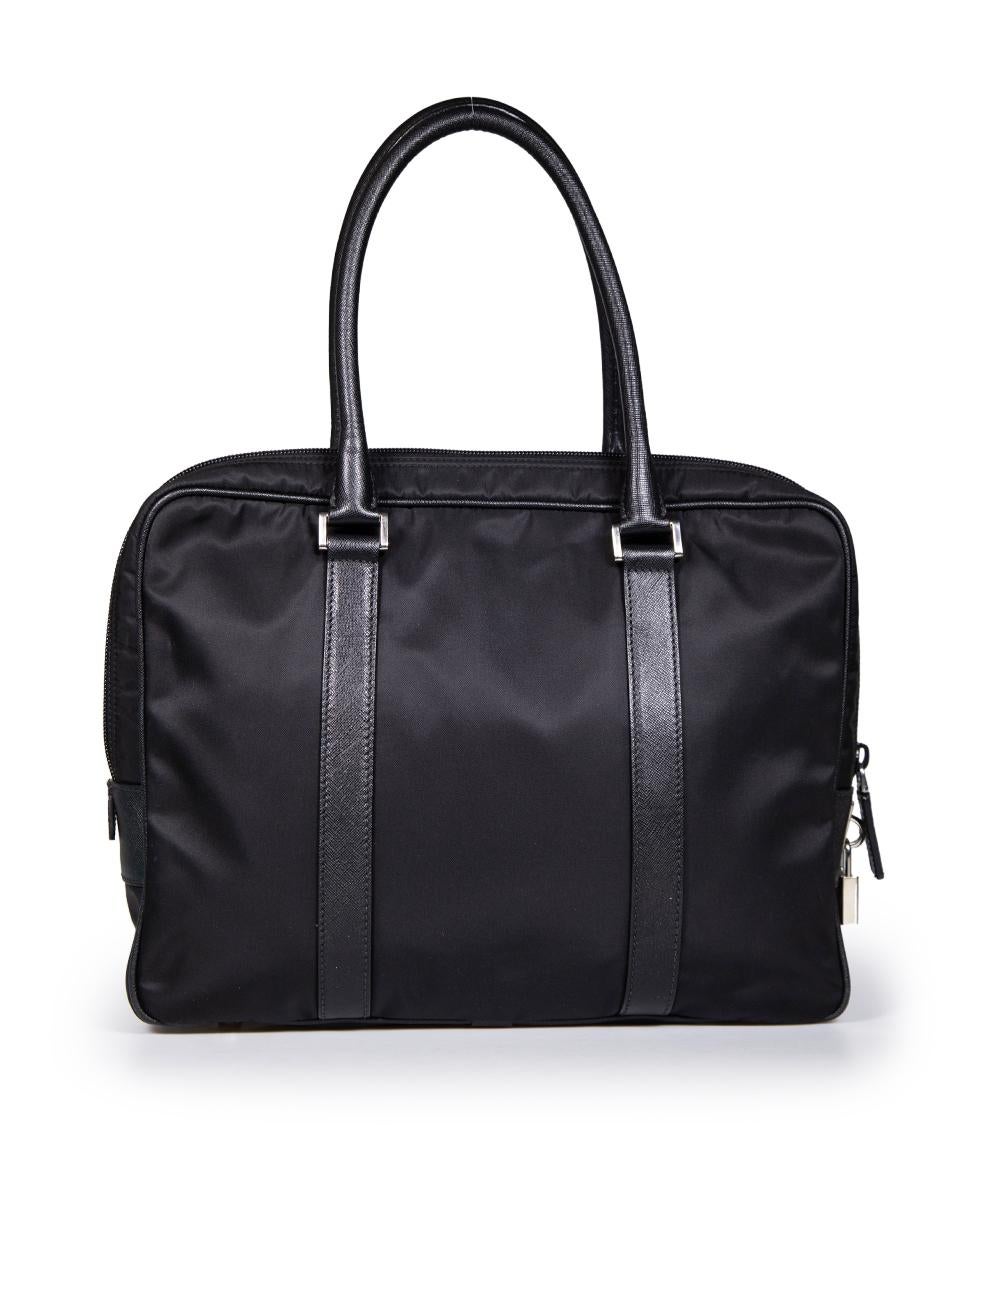 Prada Black Tessuto Saffiano Trim Handbag In Excellent Condition For Sale In London, GB